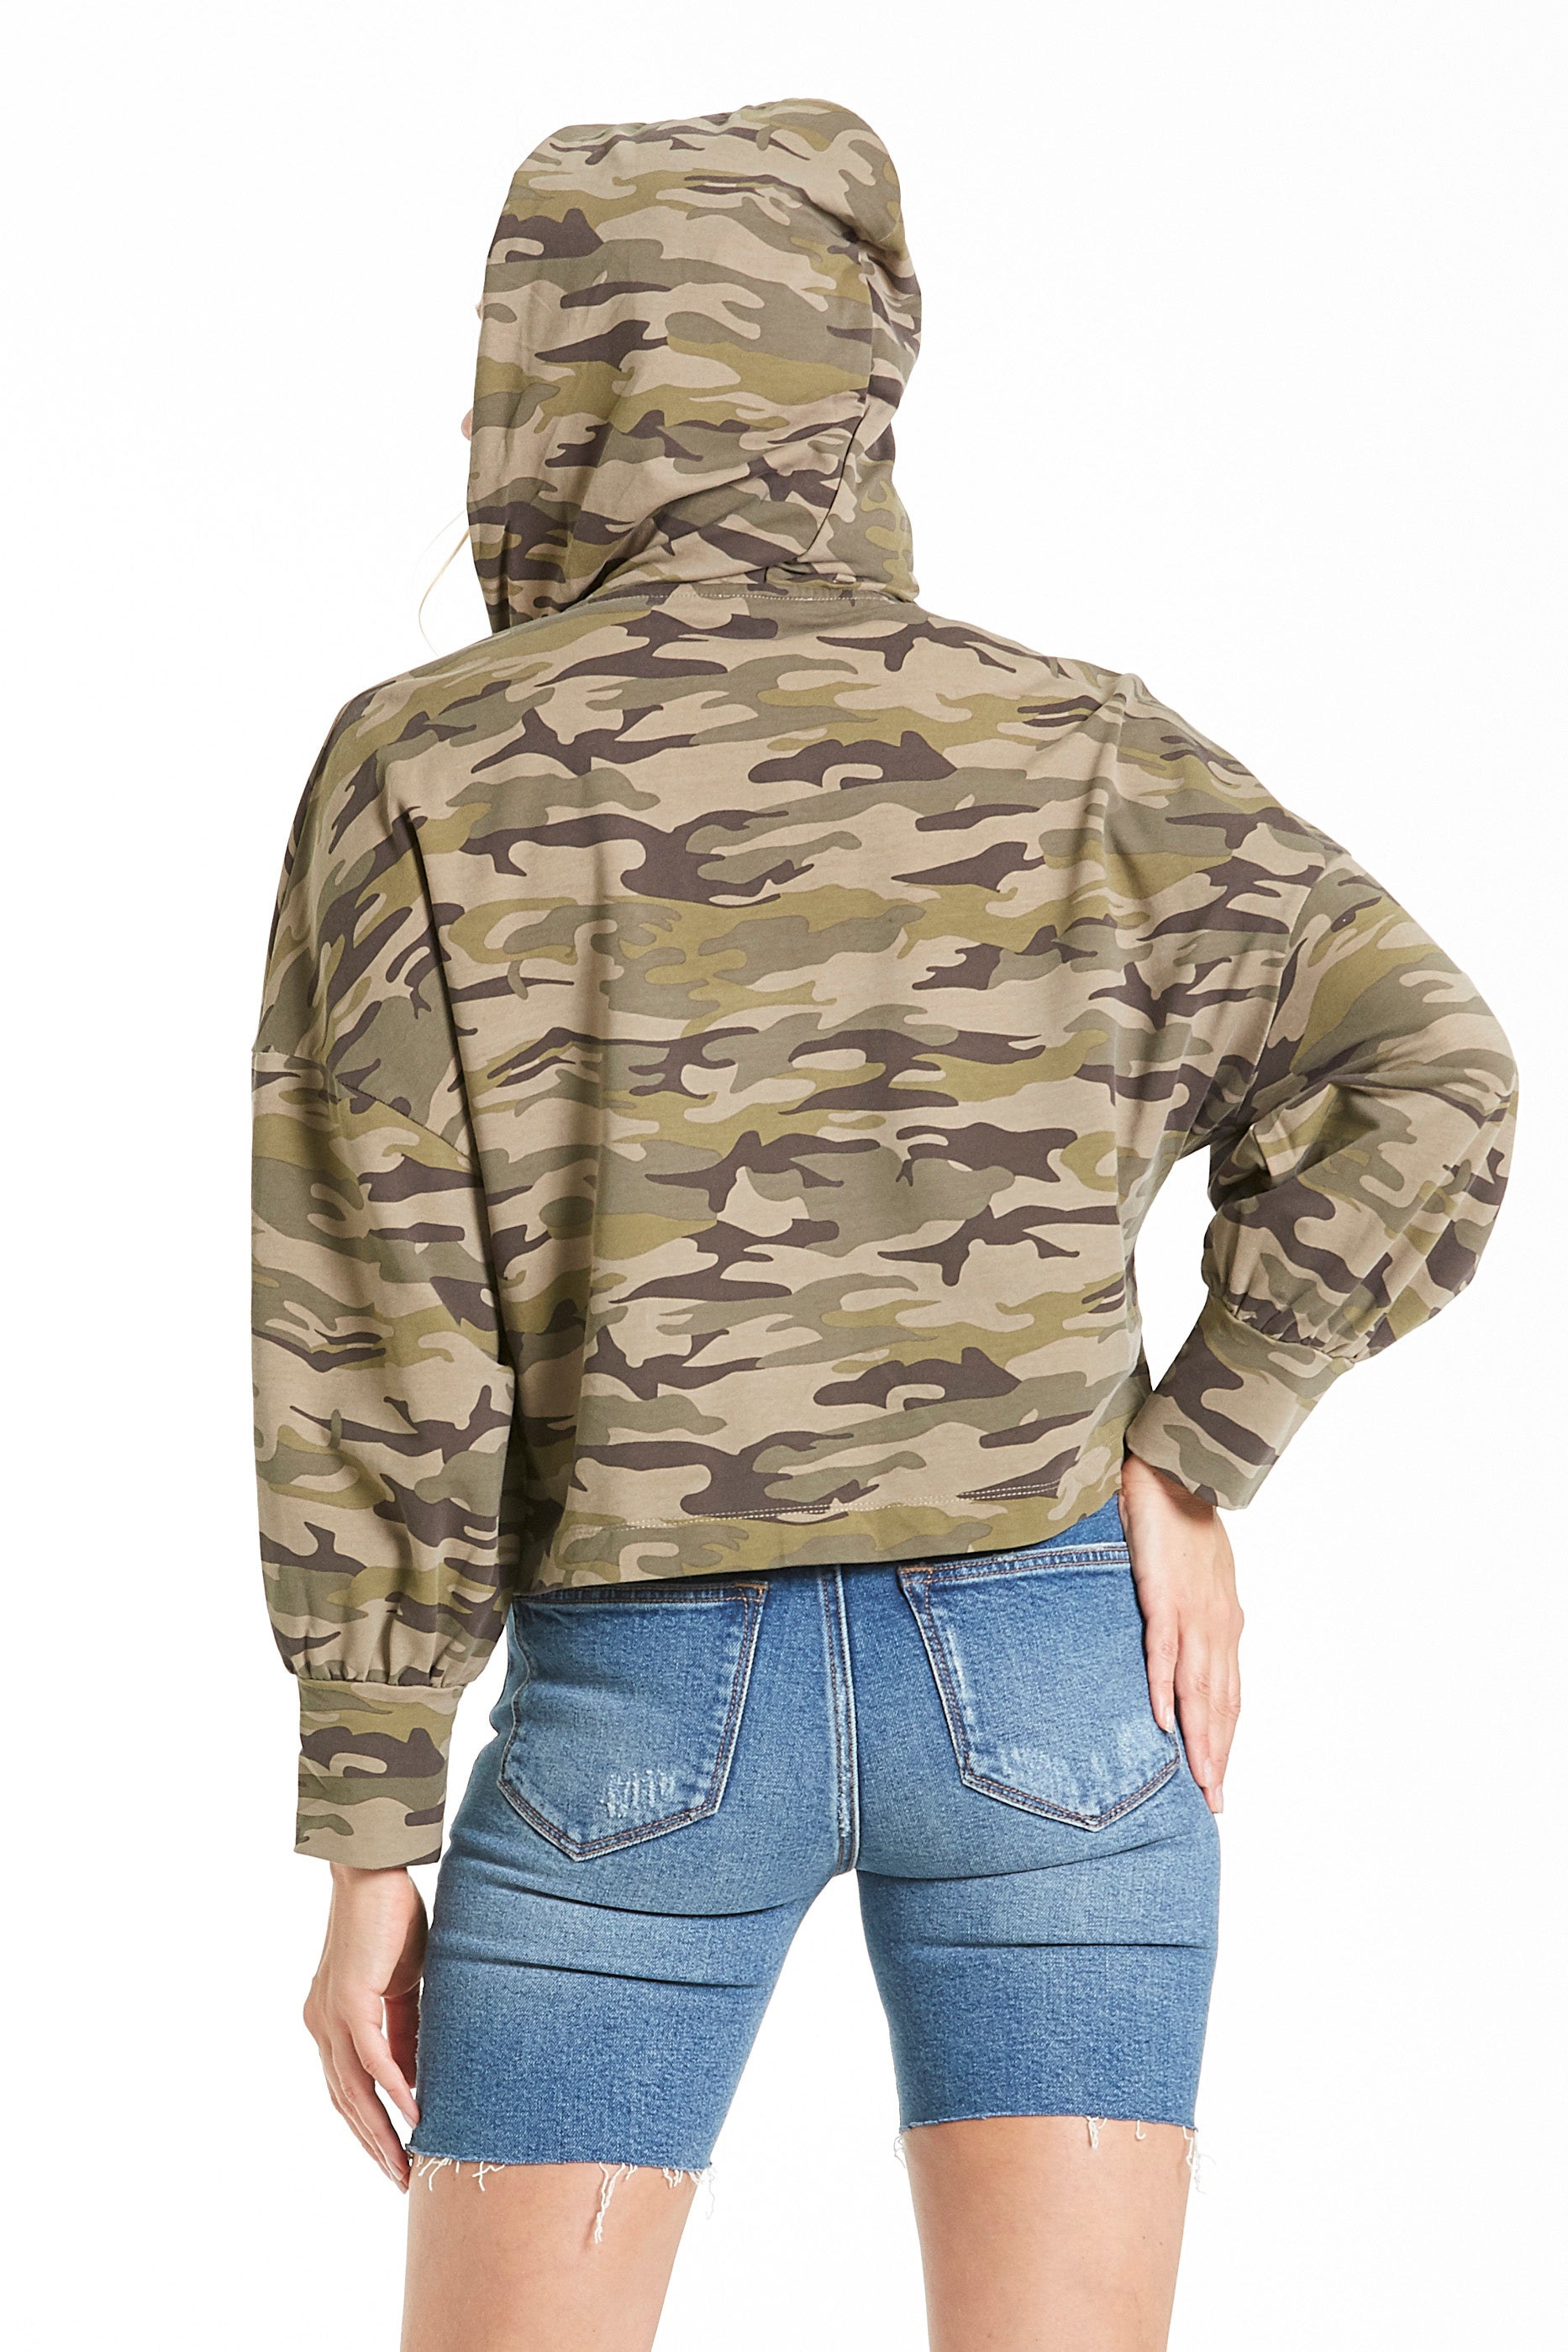 dola-hoodie-vintage-camo-jacket